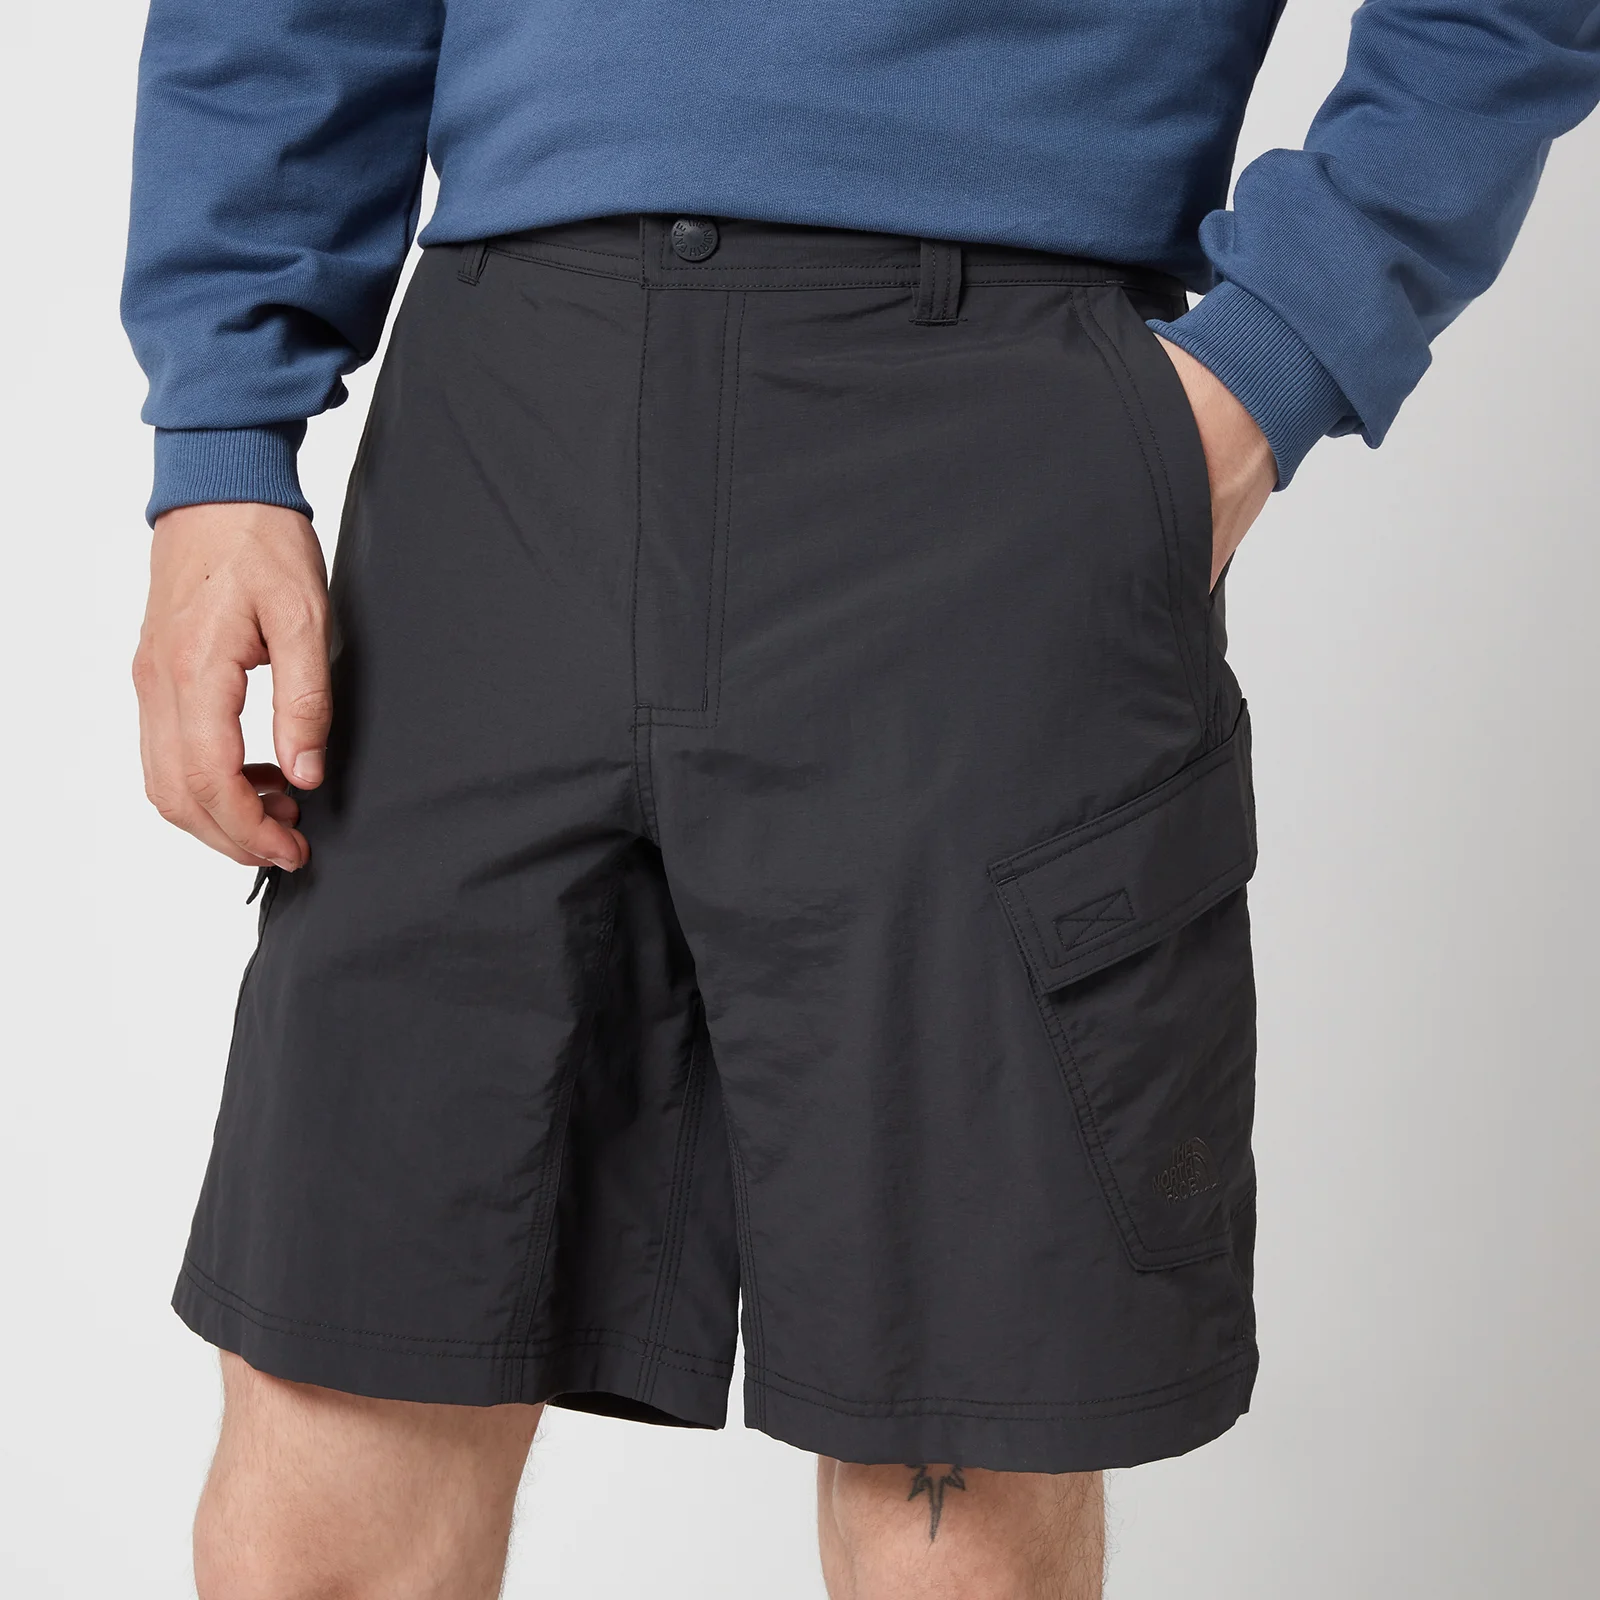 The North Face Men's Horizon Shorts - Asphalt Grey Image 1